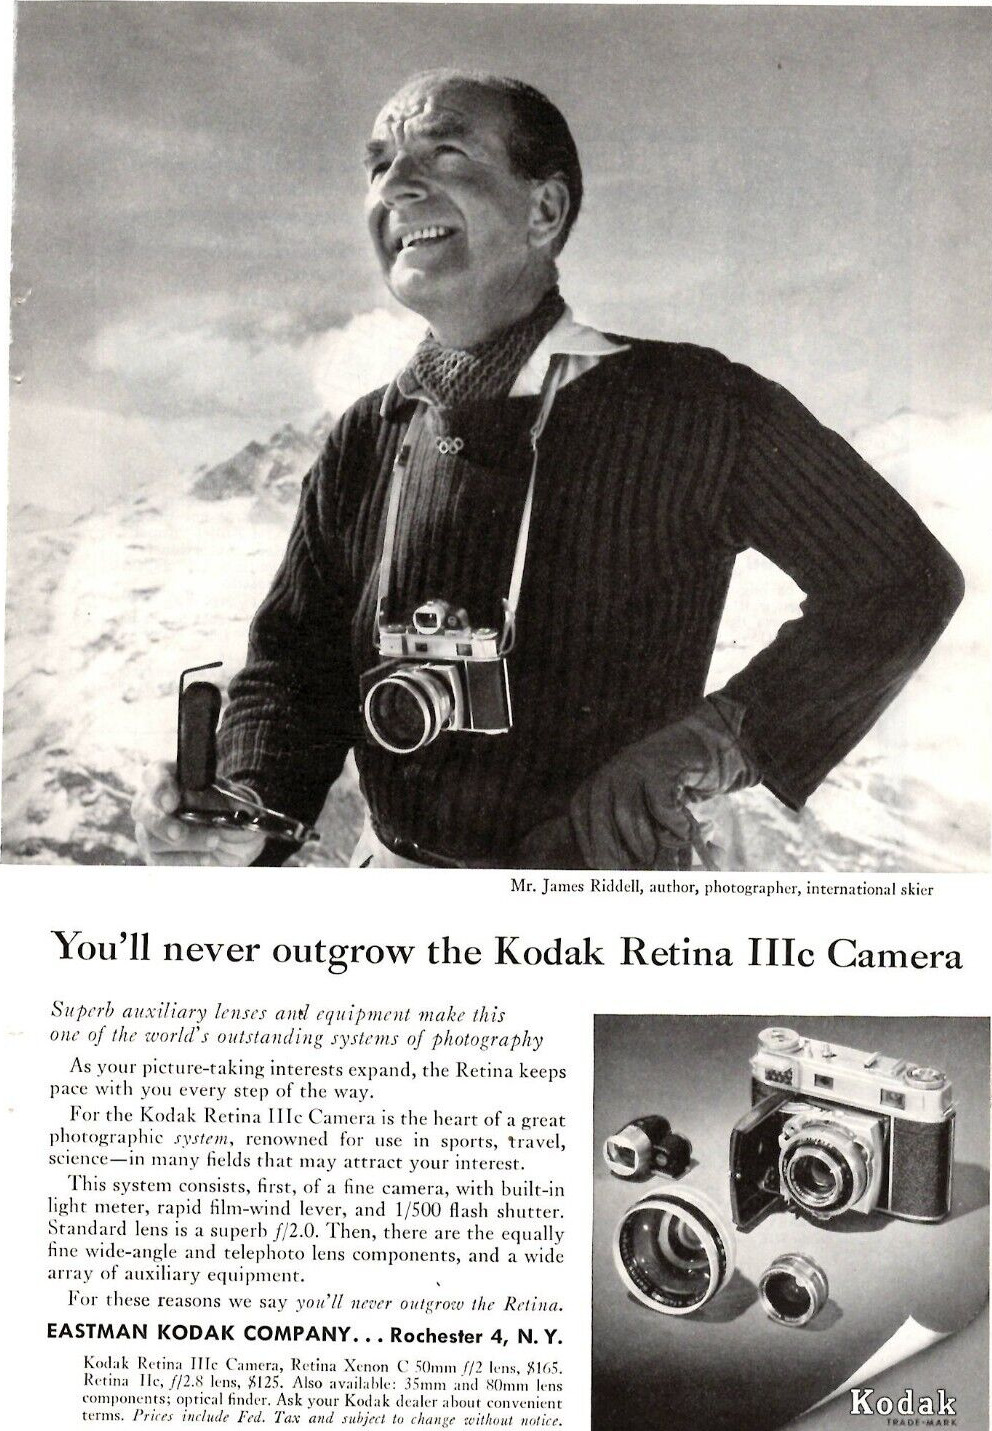 1957 Print Ad Eastman Kodak Retina IIIc Camera James Riddell Author photographer